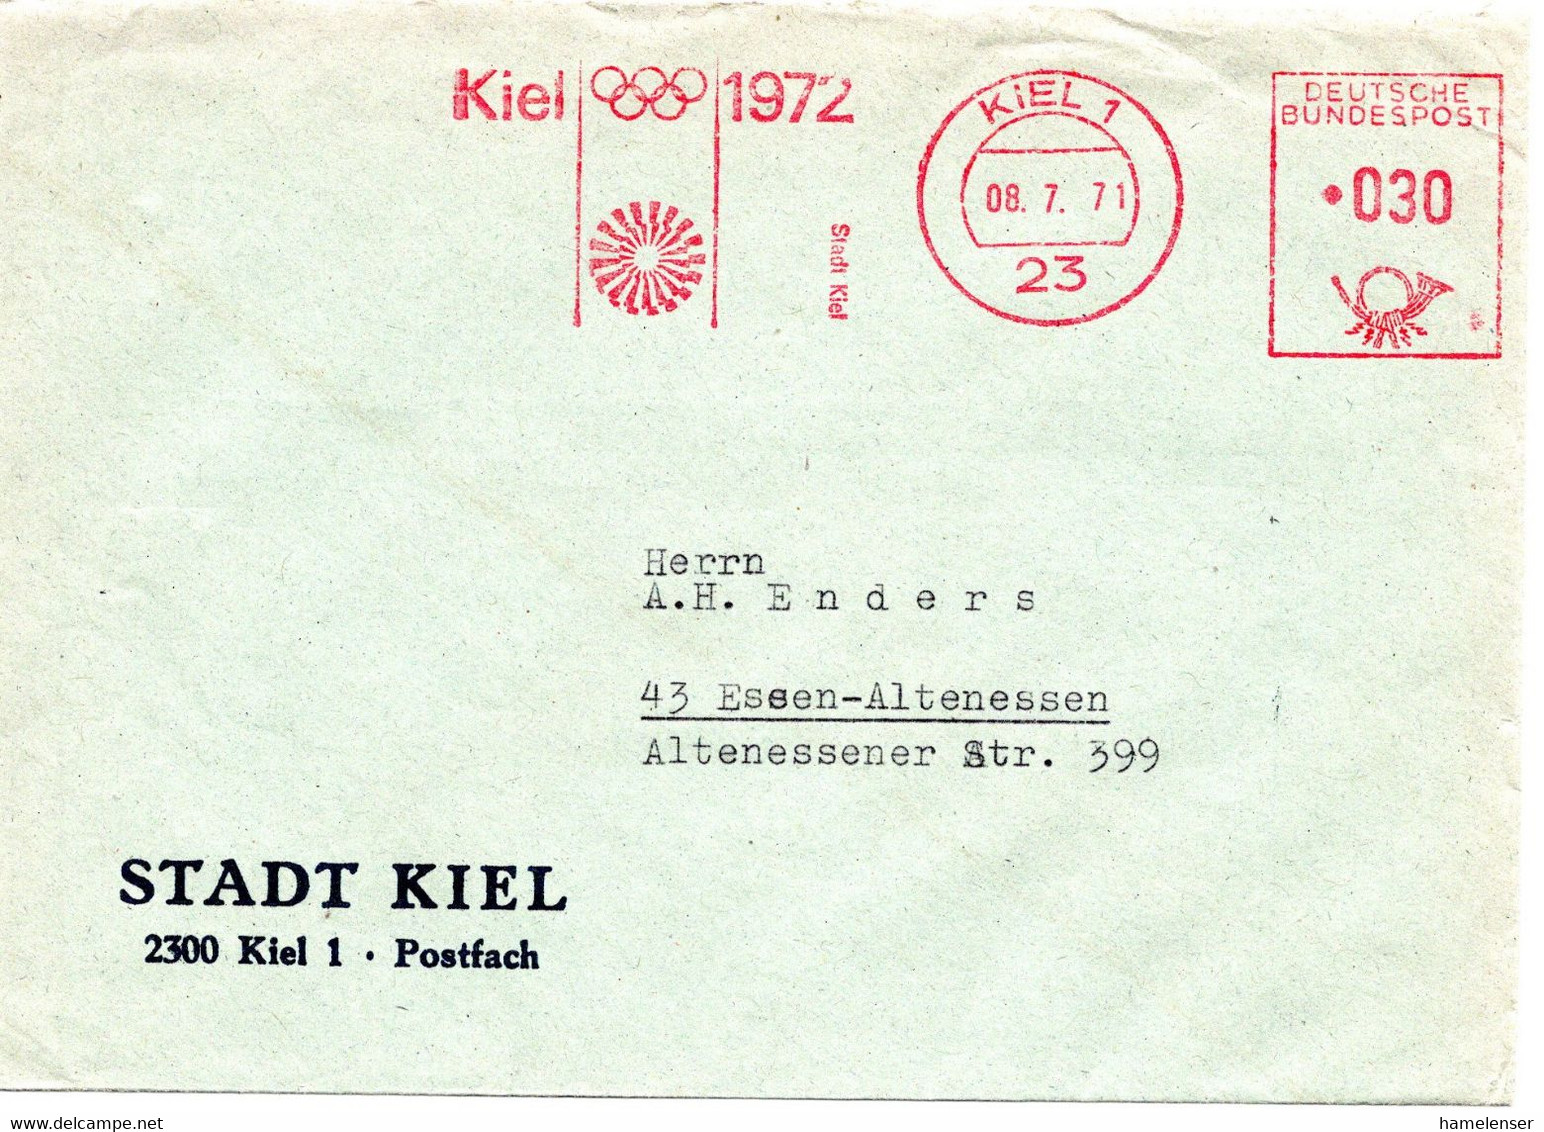 56277 - Bund - 1971 - 30Pfg AbsFreistpl KIEL - KIEL 1972 STADT KIEL -> Essen - Sommer 1972: München